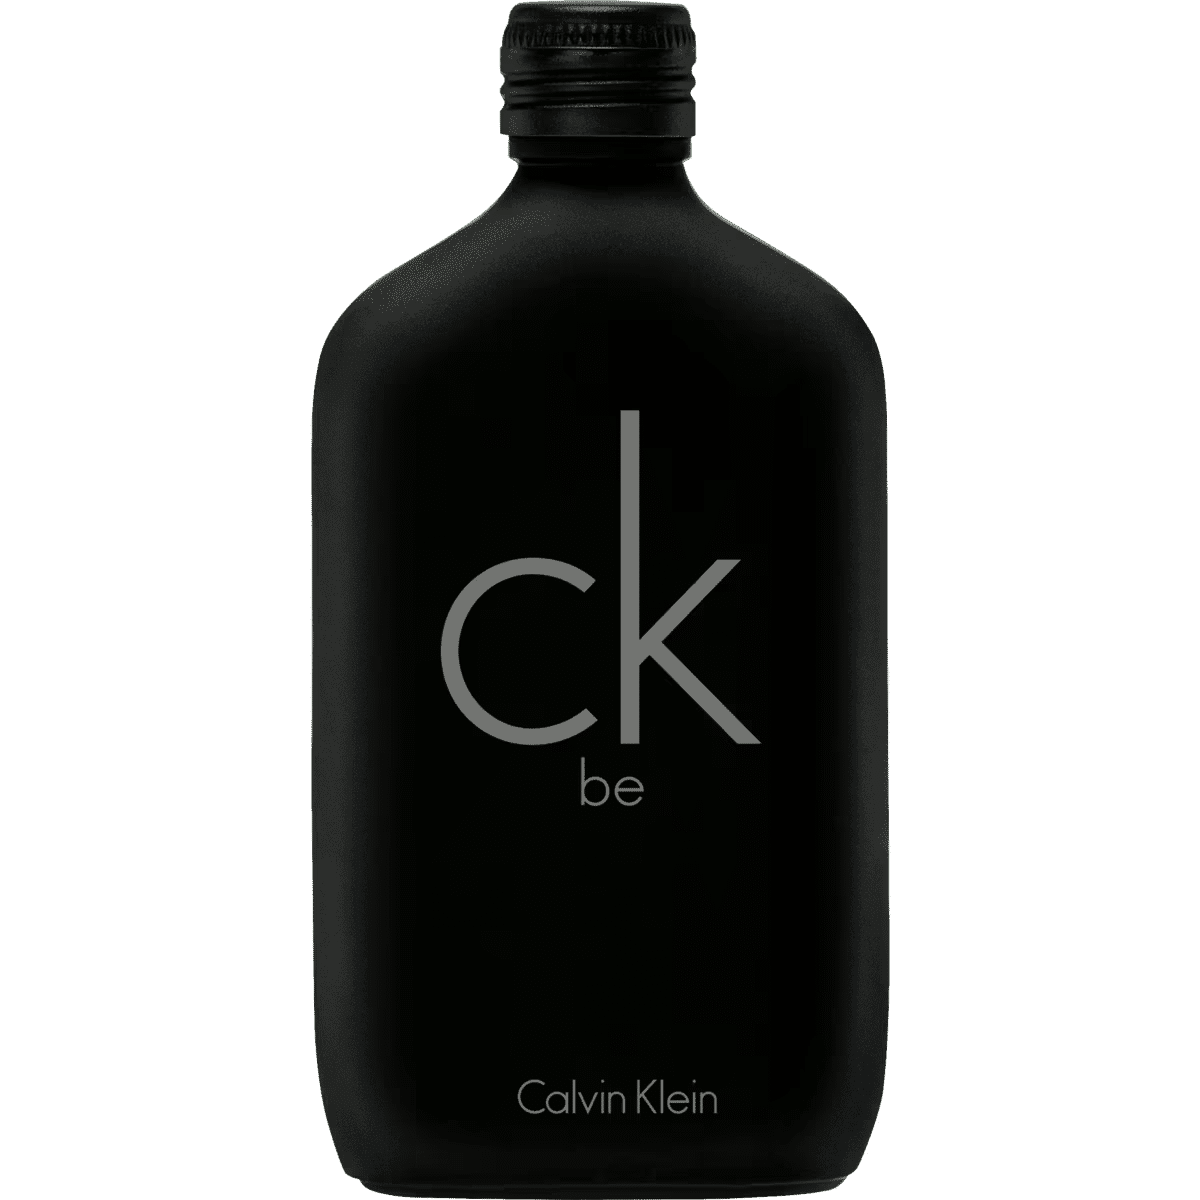 CALVIN KLEIN ck be 50 ml